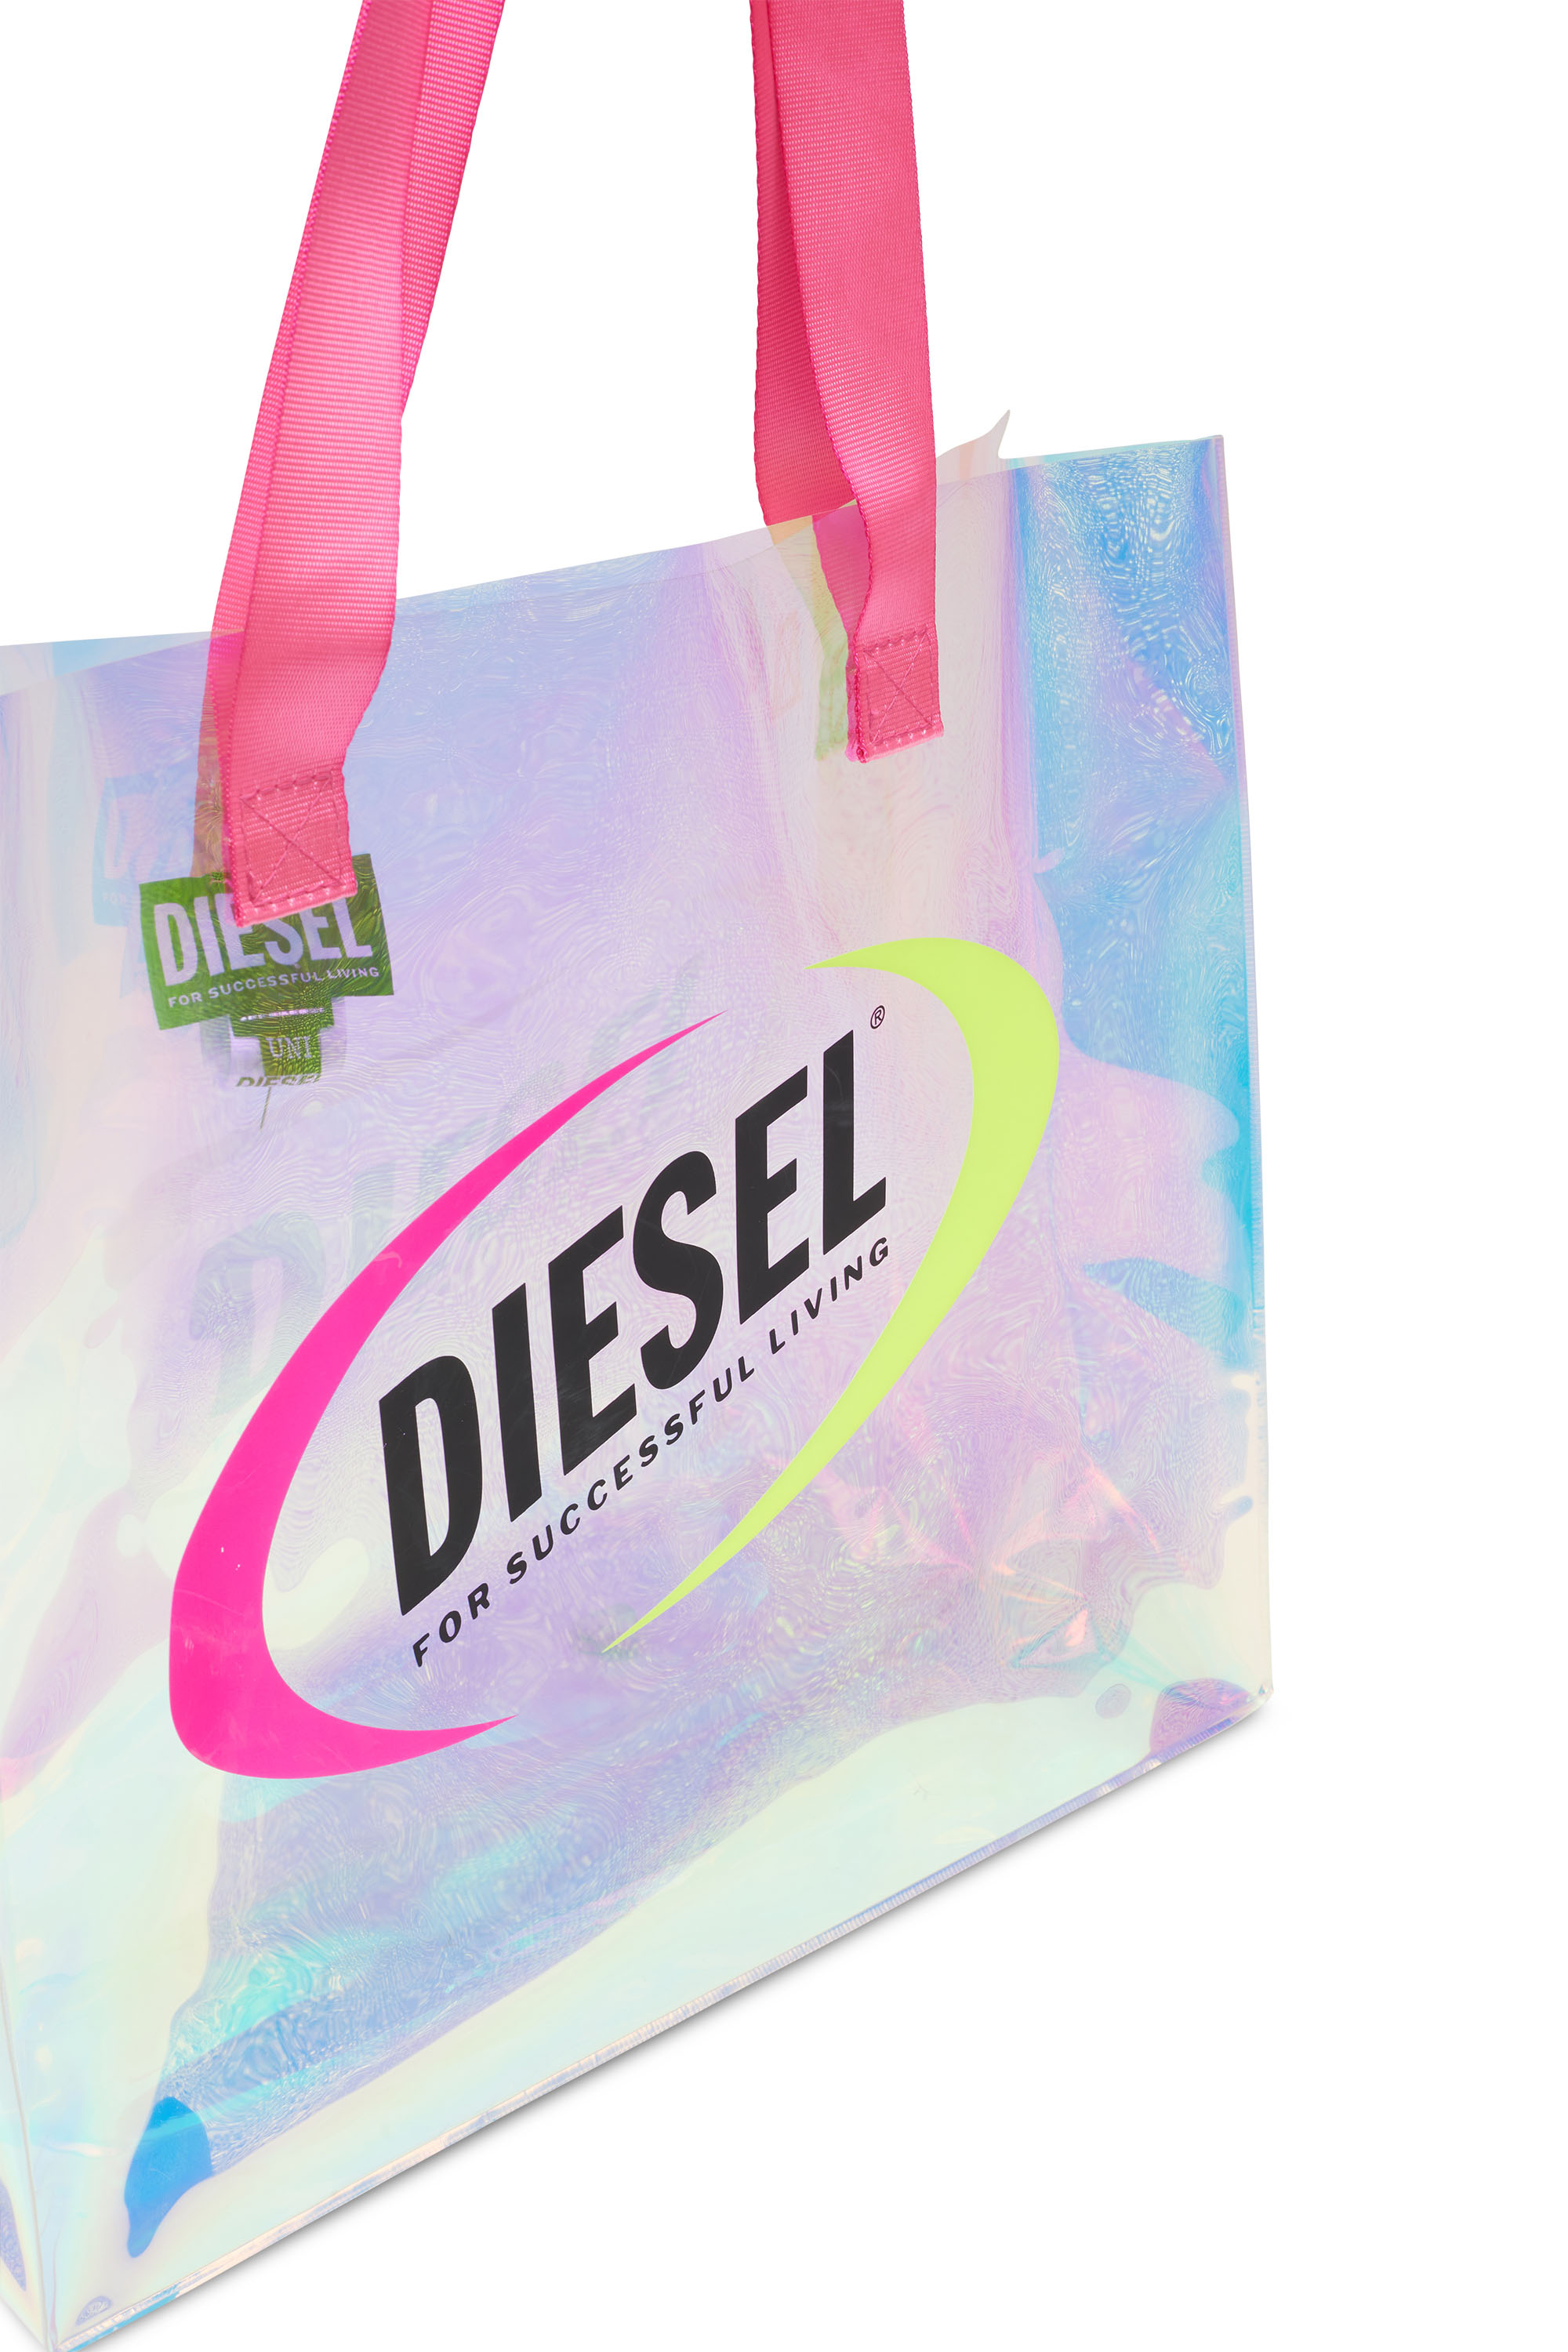 Diesel - WORSA, Azure - Image 5